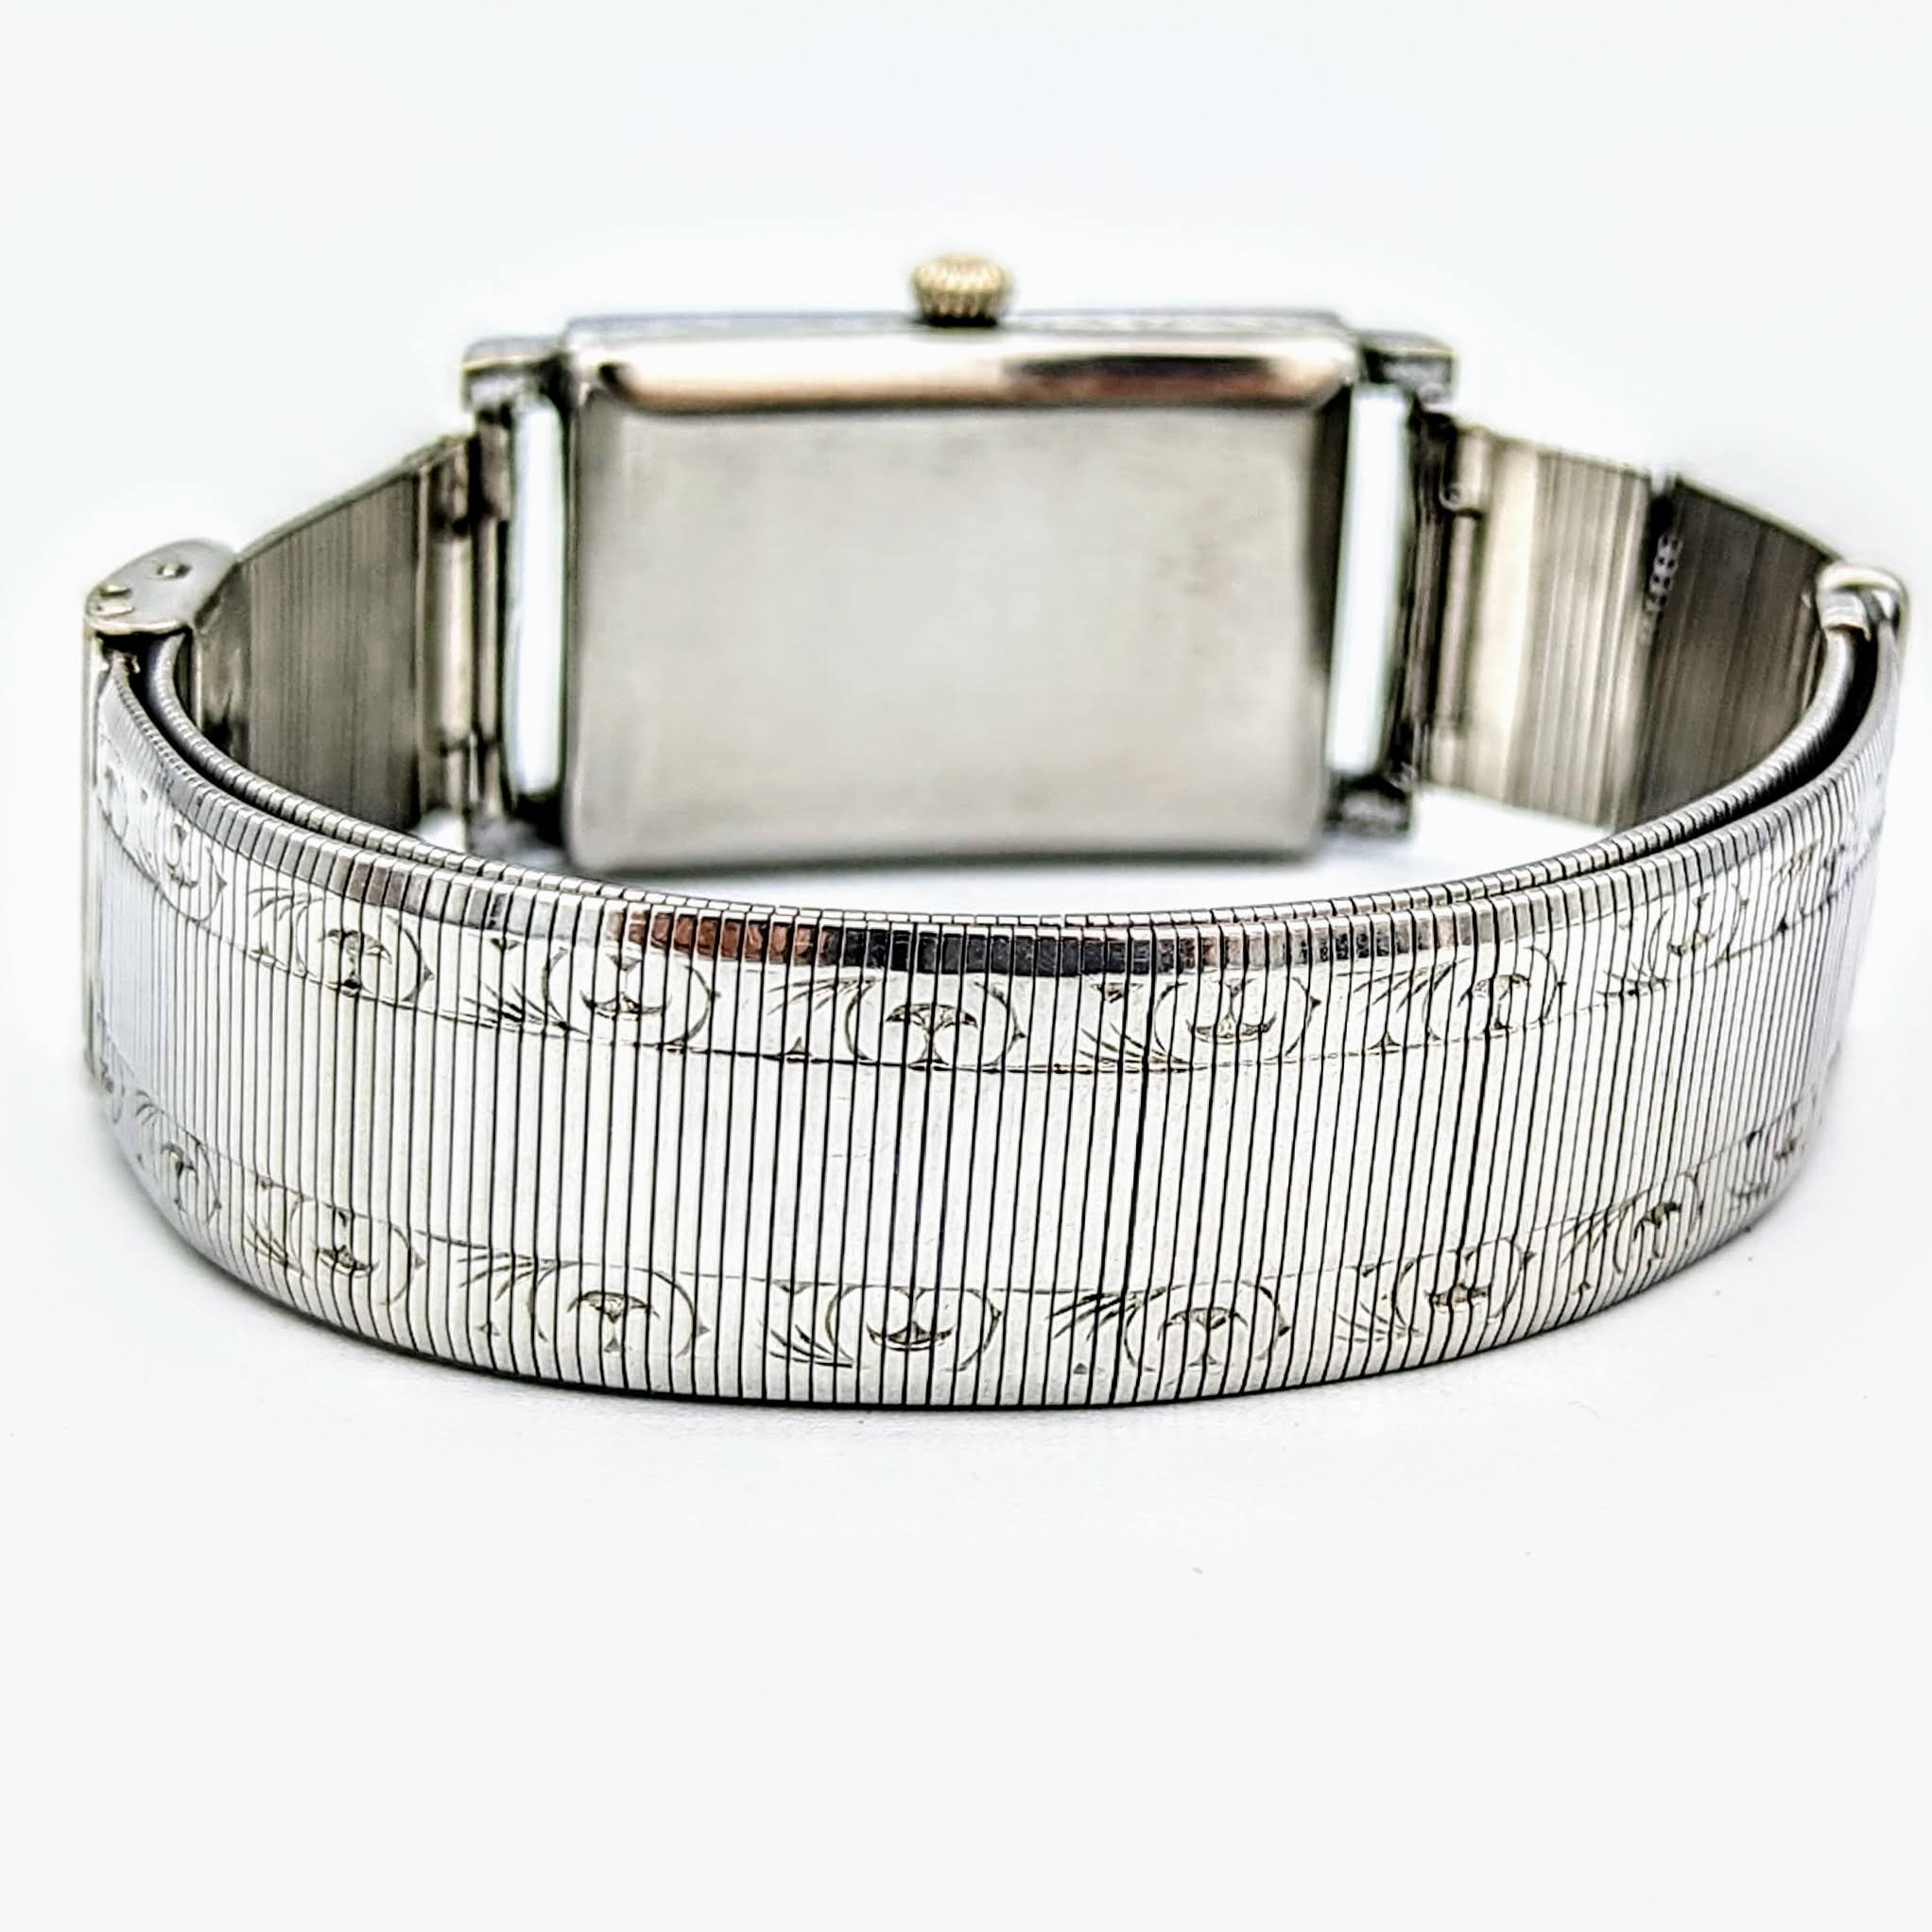 Berg Bruchsicher Wristwatch Late 1930s to Mid 1940s Stainless Steel Watch